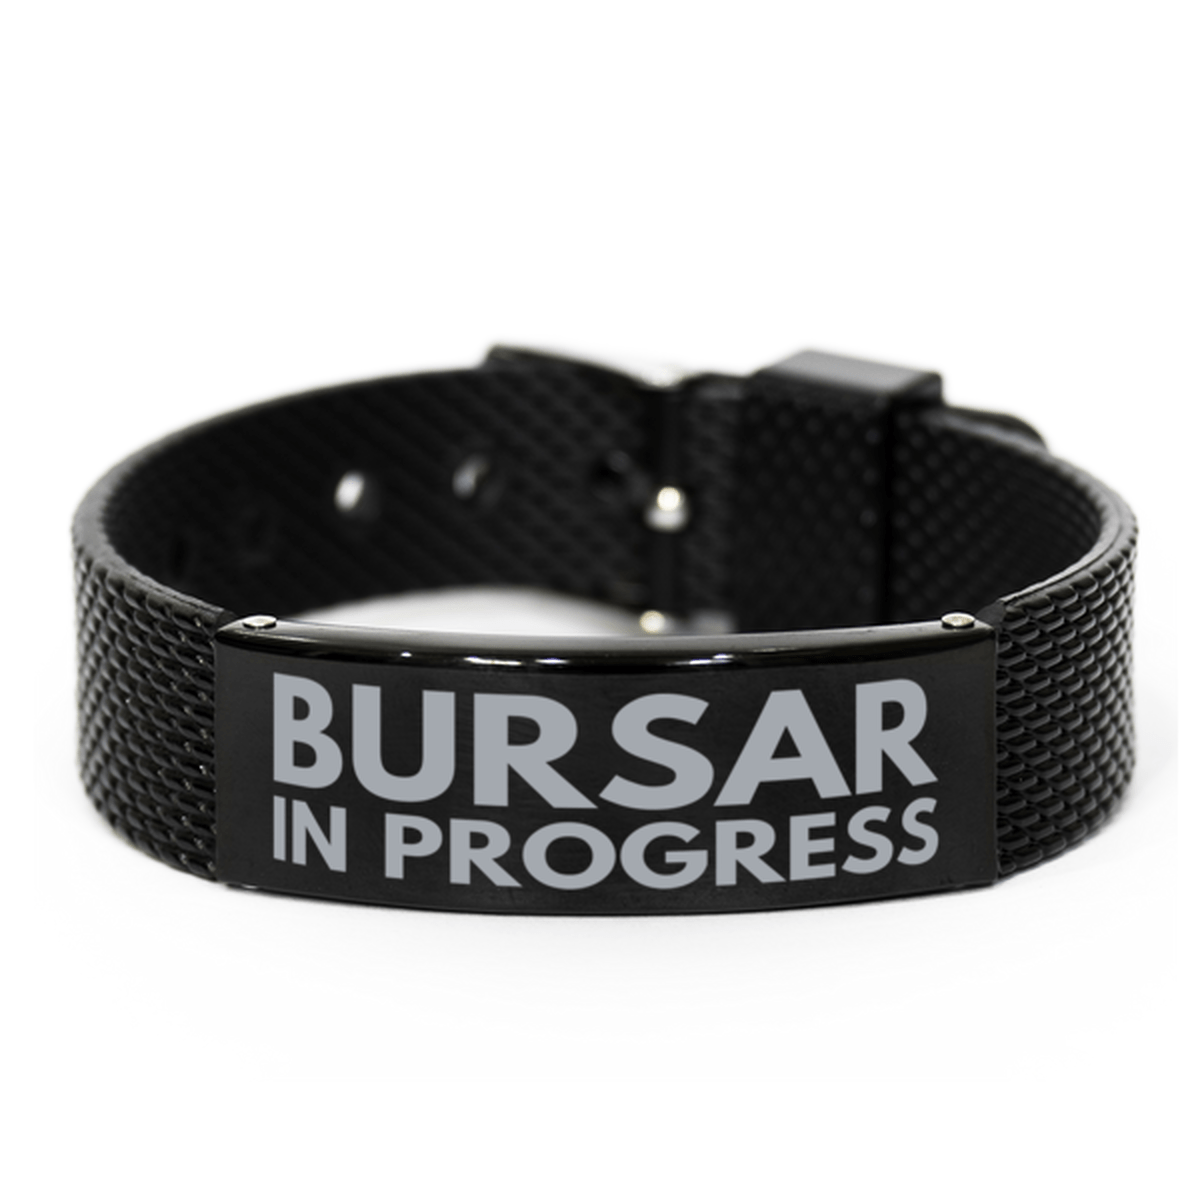 Inspirational Bursar Black Shark Mesh Bracelet, Bursar In Progress, Best Graduation Gifts for Students